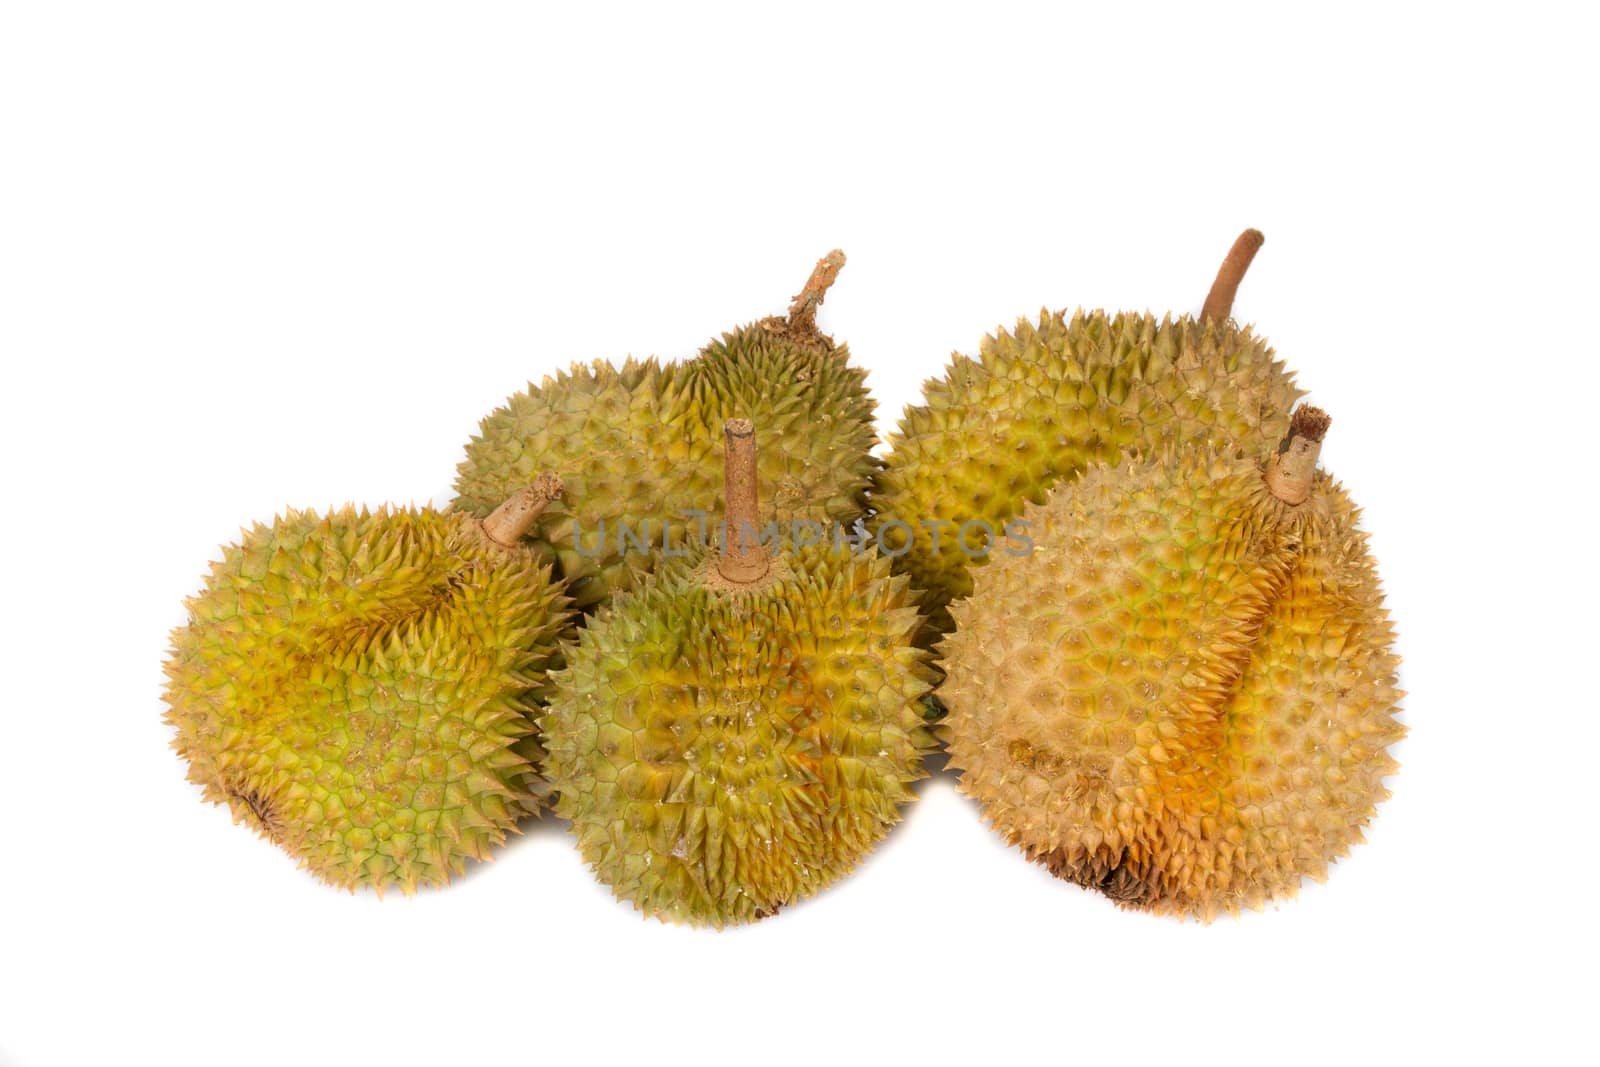 Tropical Fruits - Durian by kiankhoon